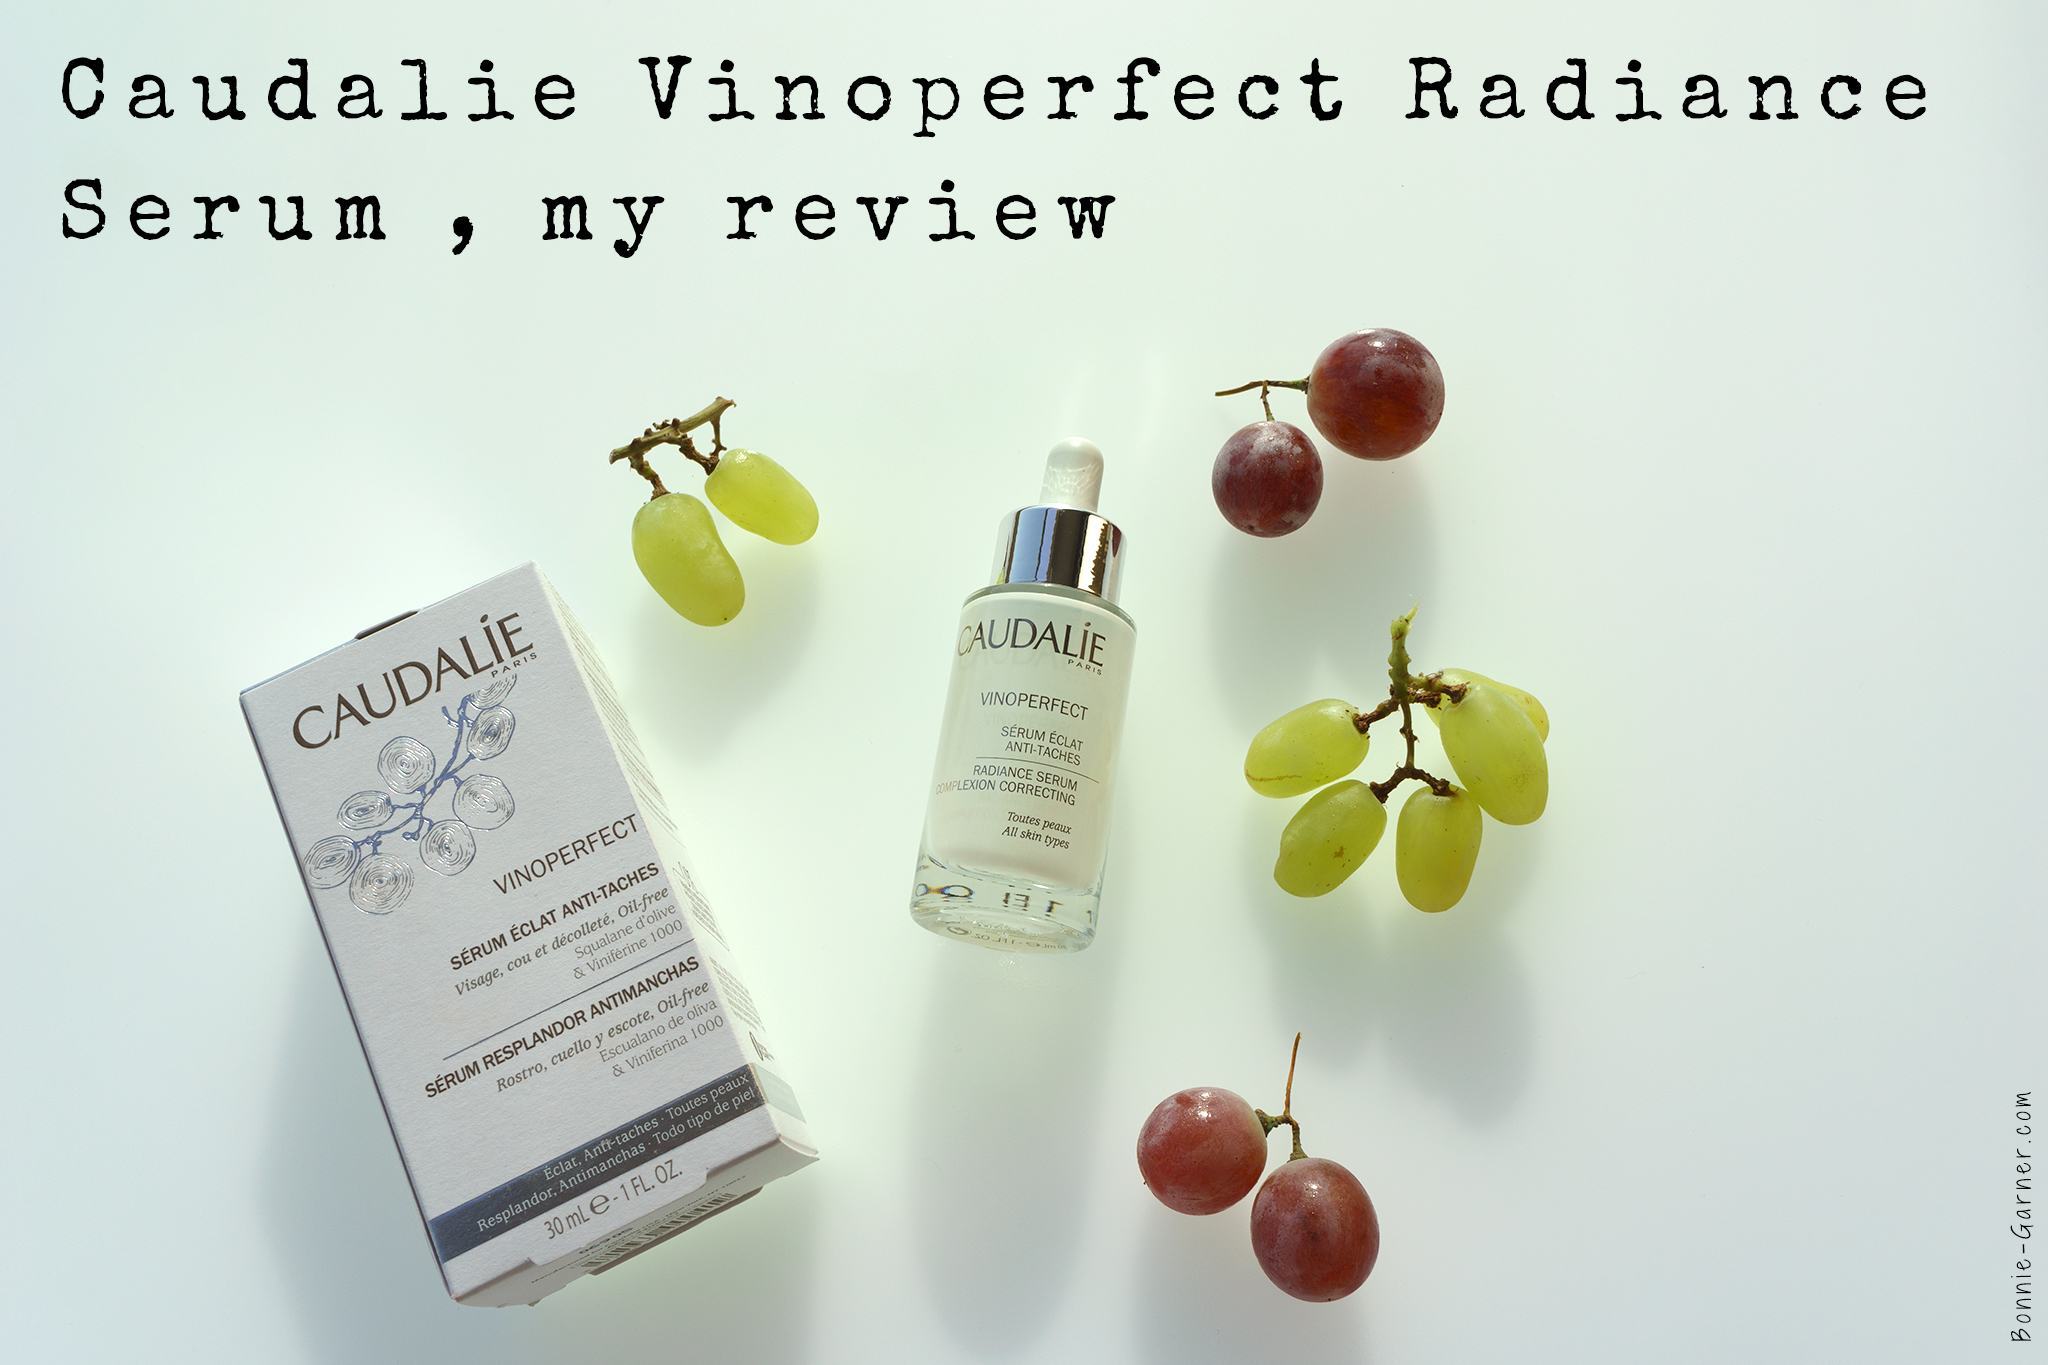 Caudalie Vinoperfect Radiance Serum, my review